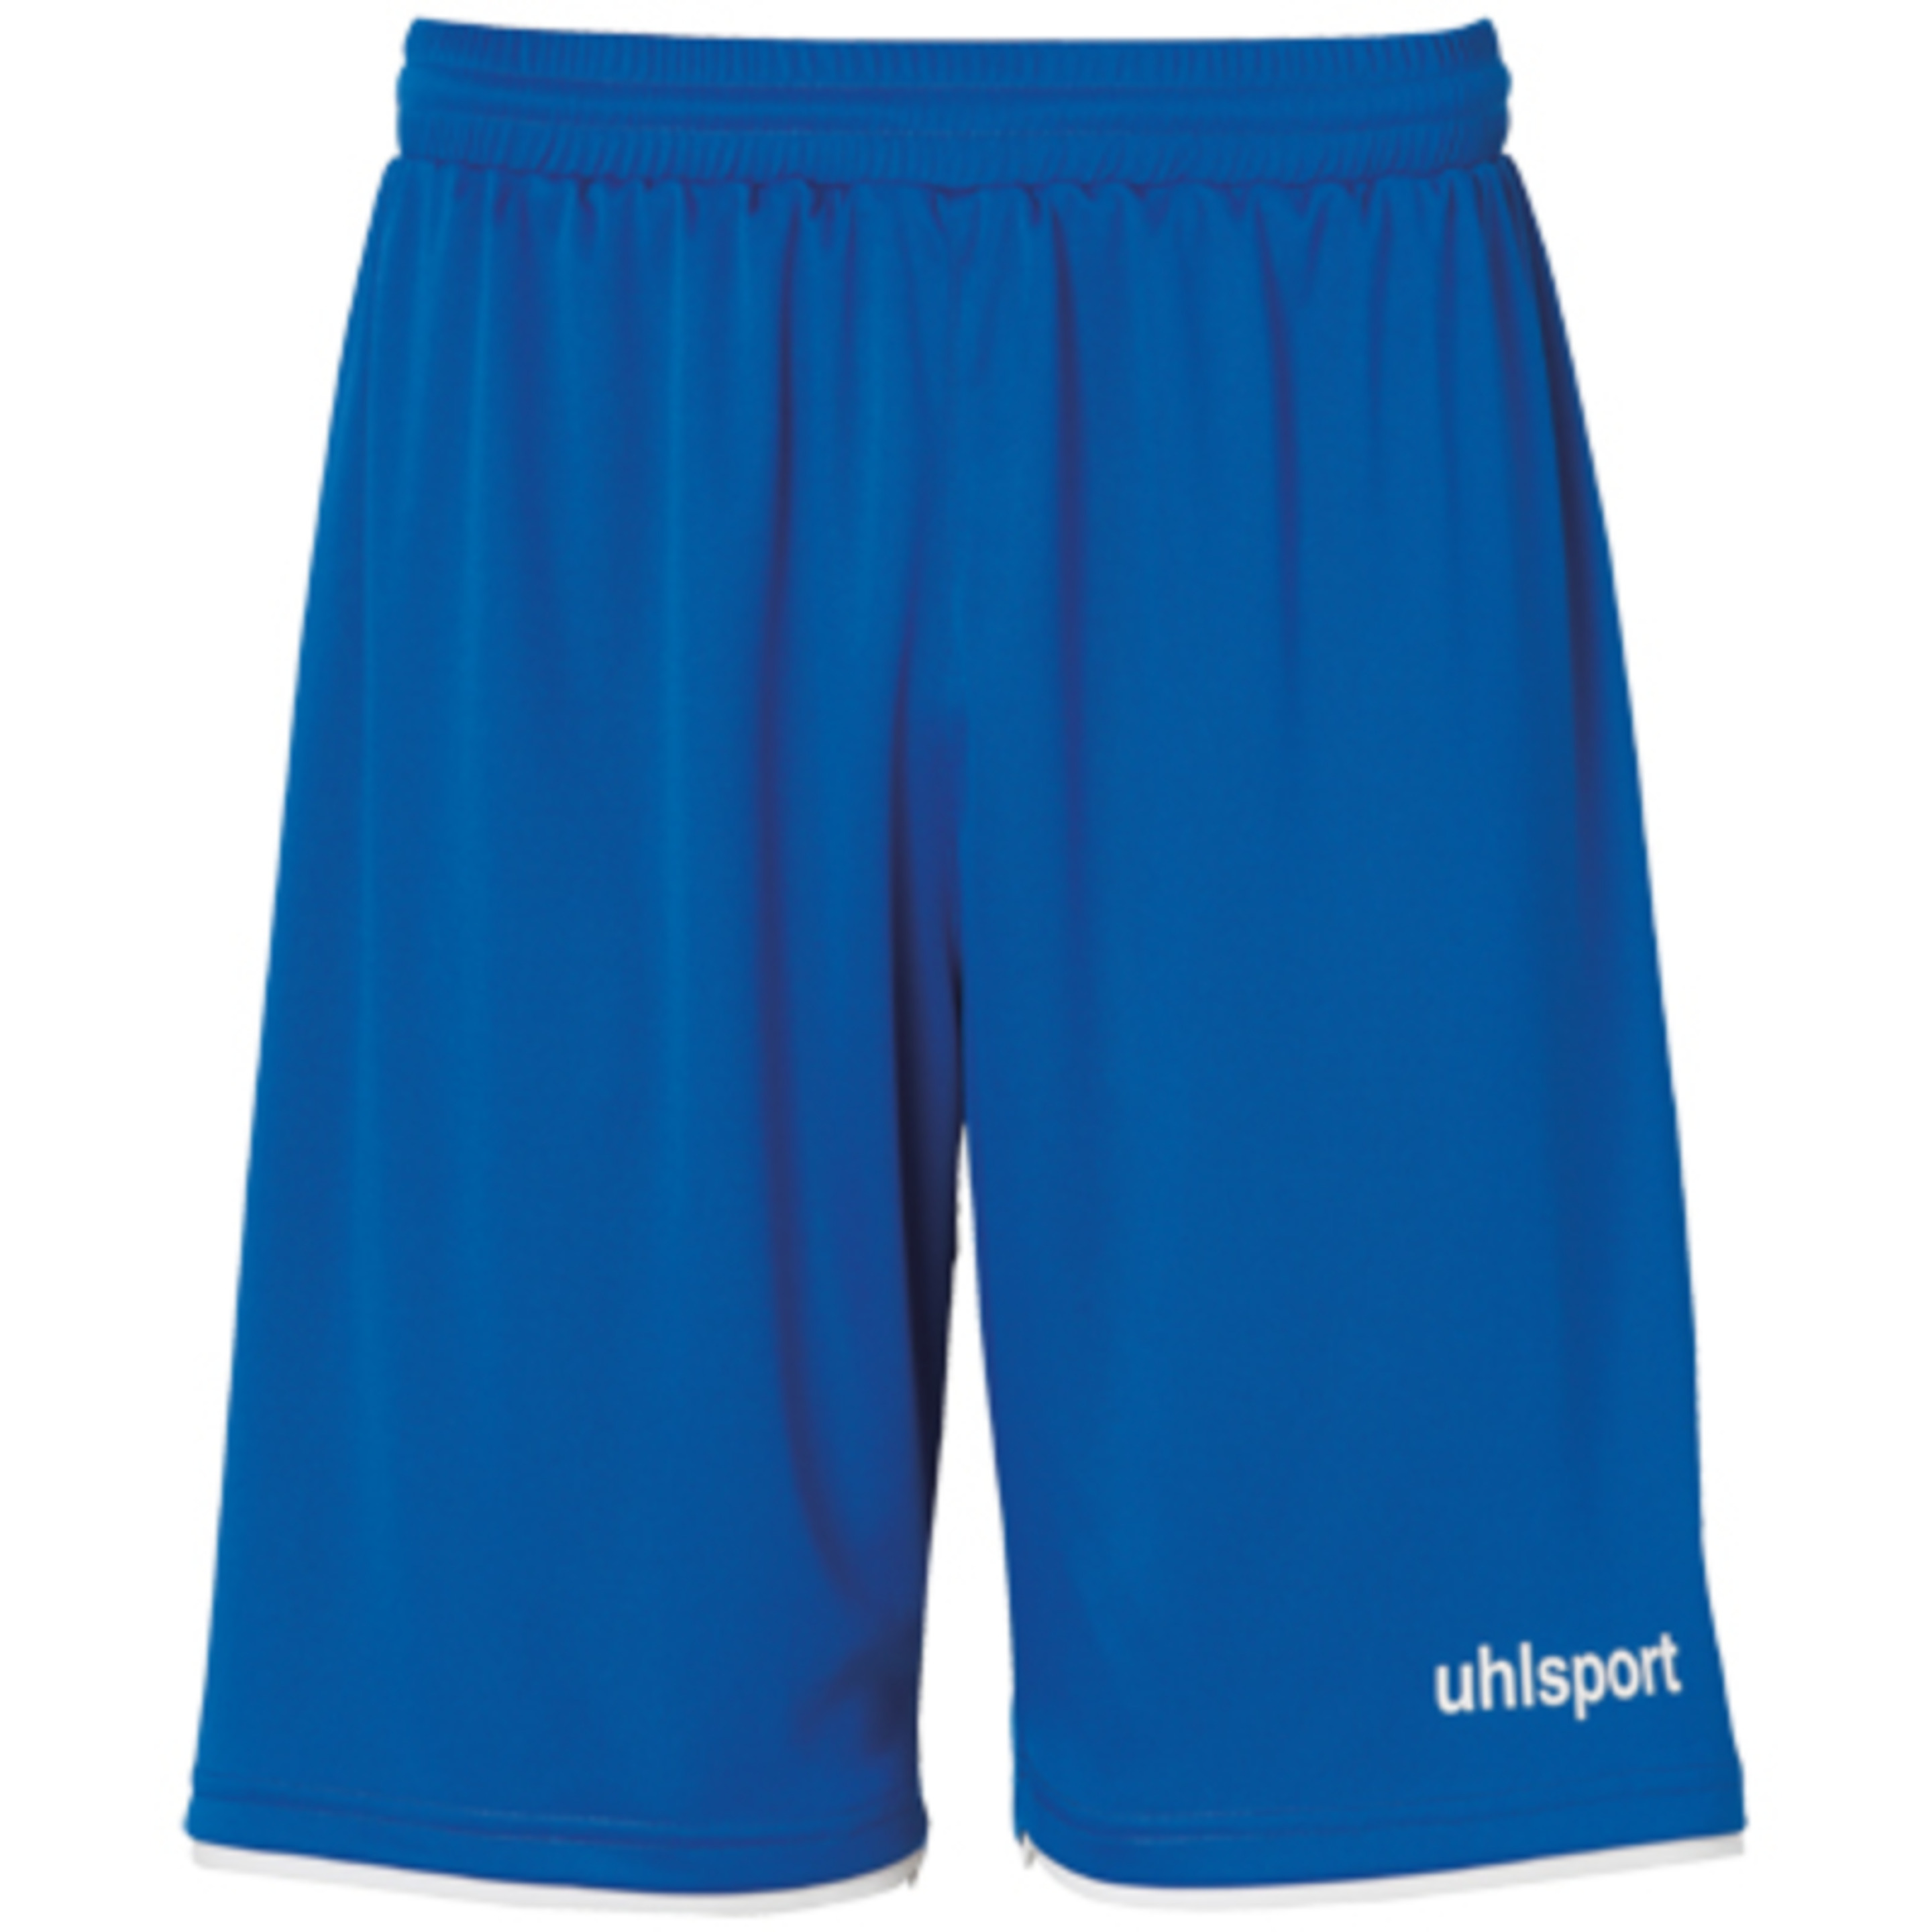 Club Shorts Azur/blanco Uhlsport